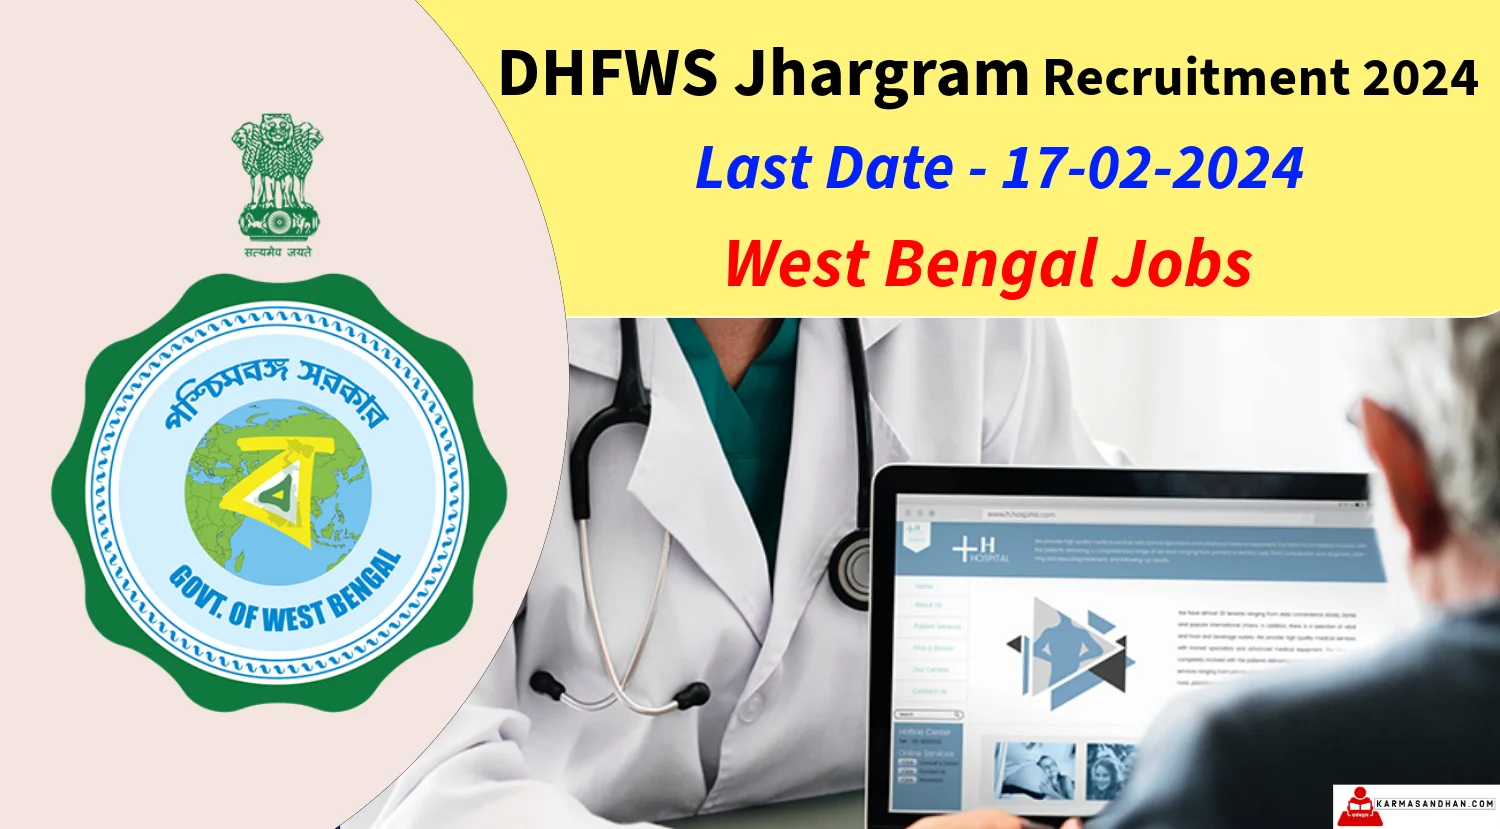 DHFWS Jhargram Various Vacancy Recruitment 2024 under MHM